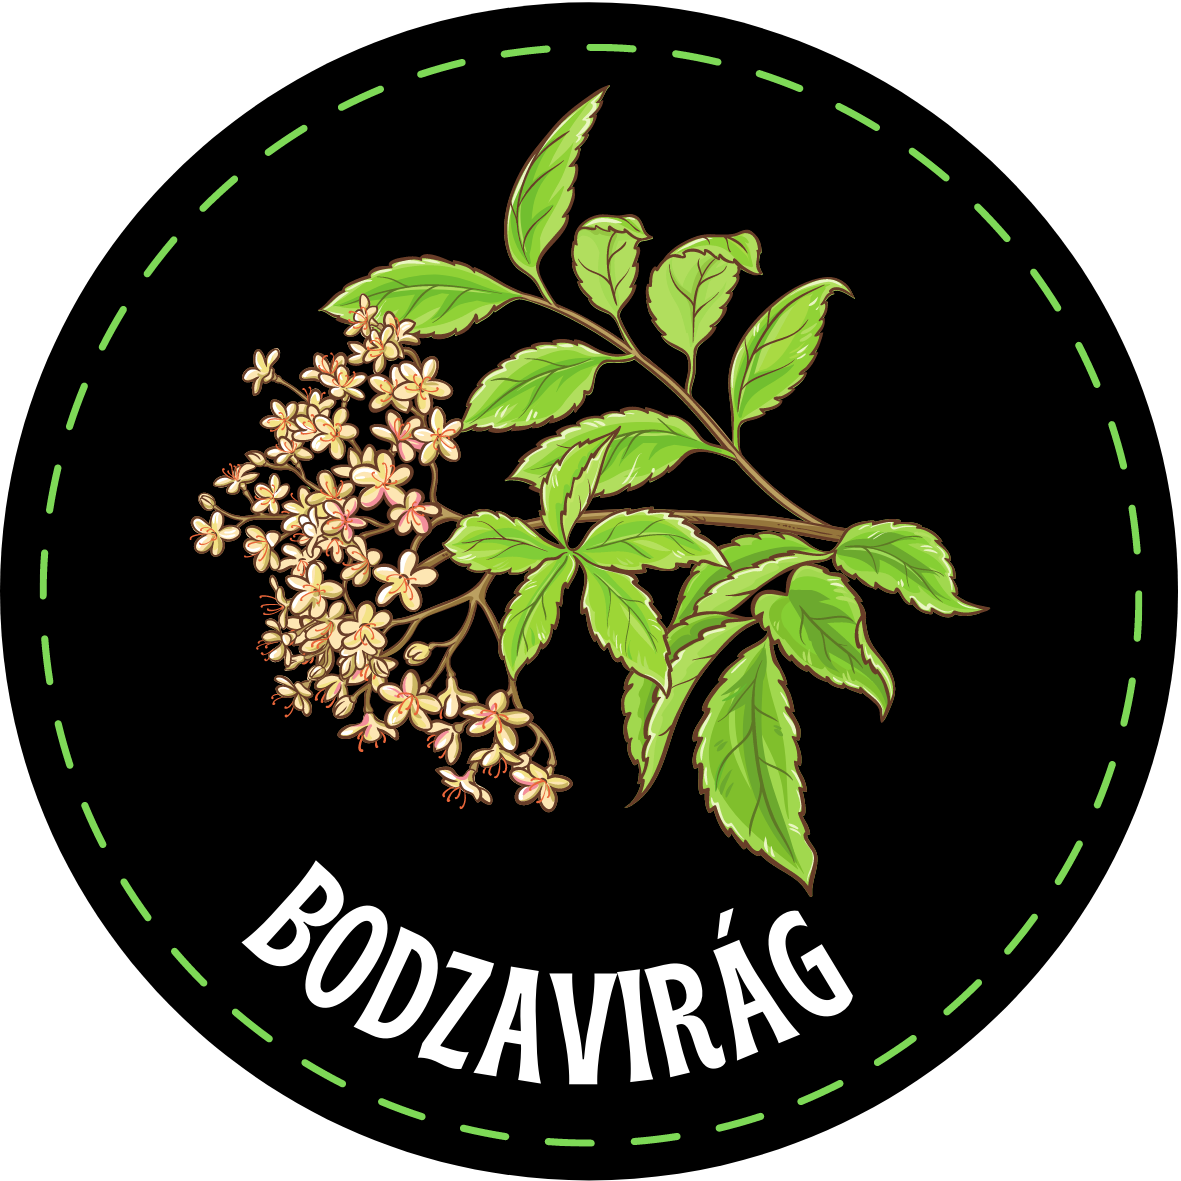 Bodzavirág / Fekete bodza